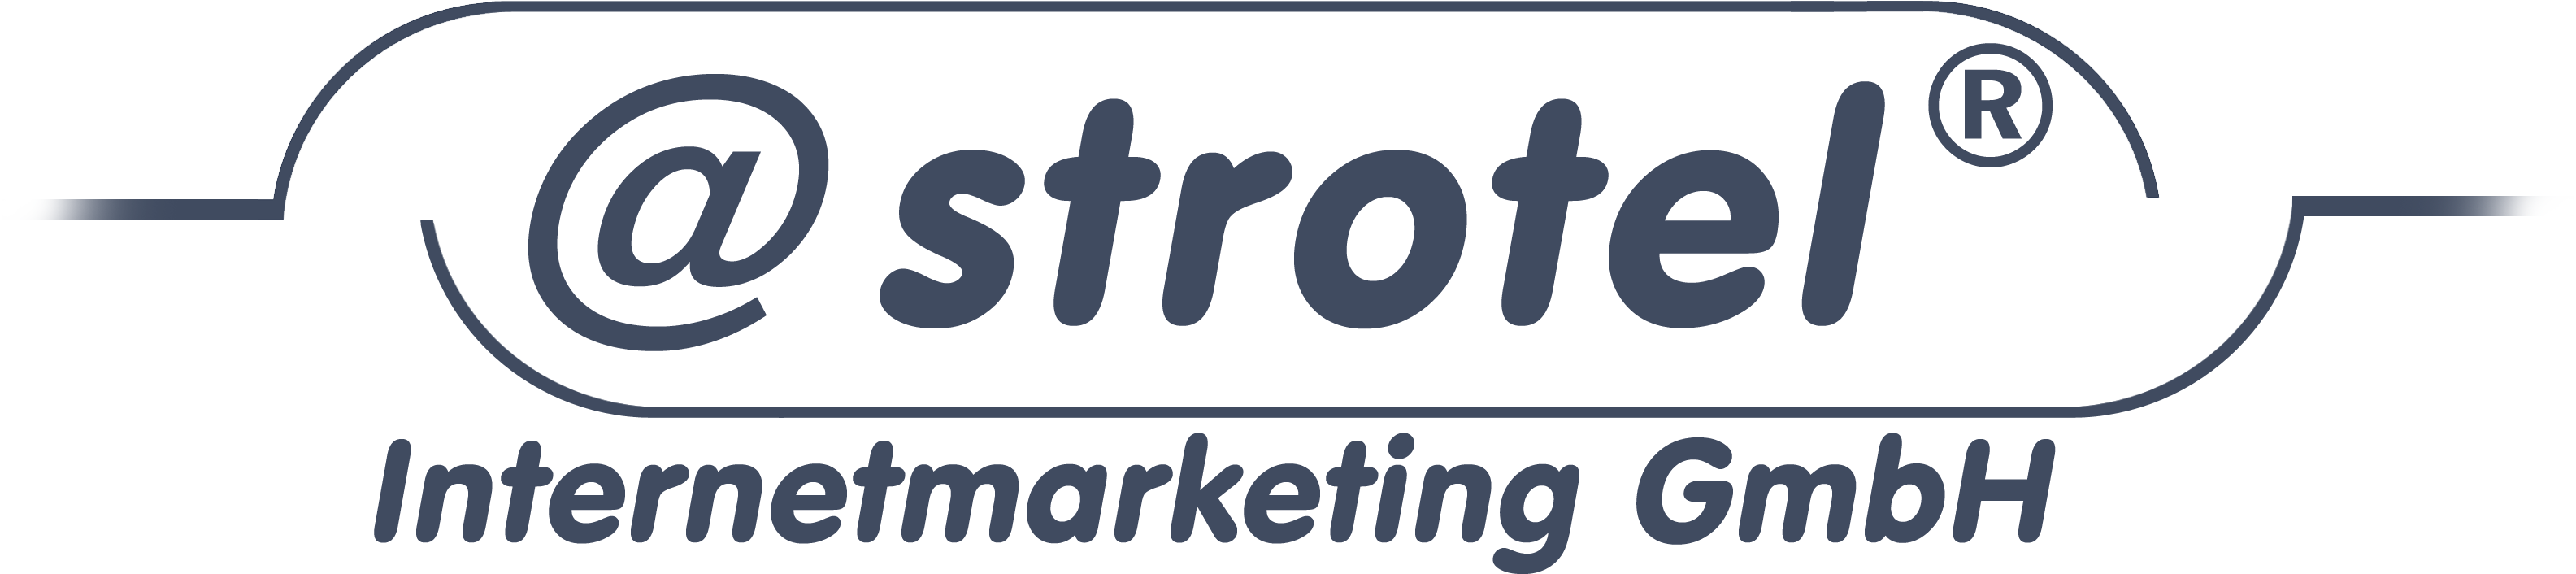 Astrotel Internetmarketing GmbH